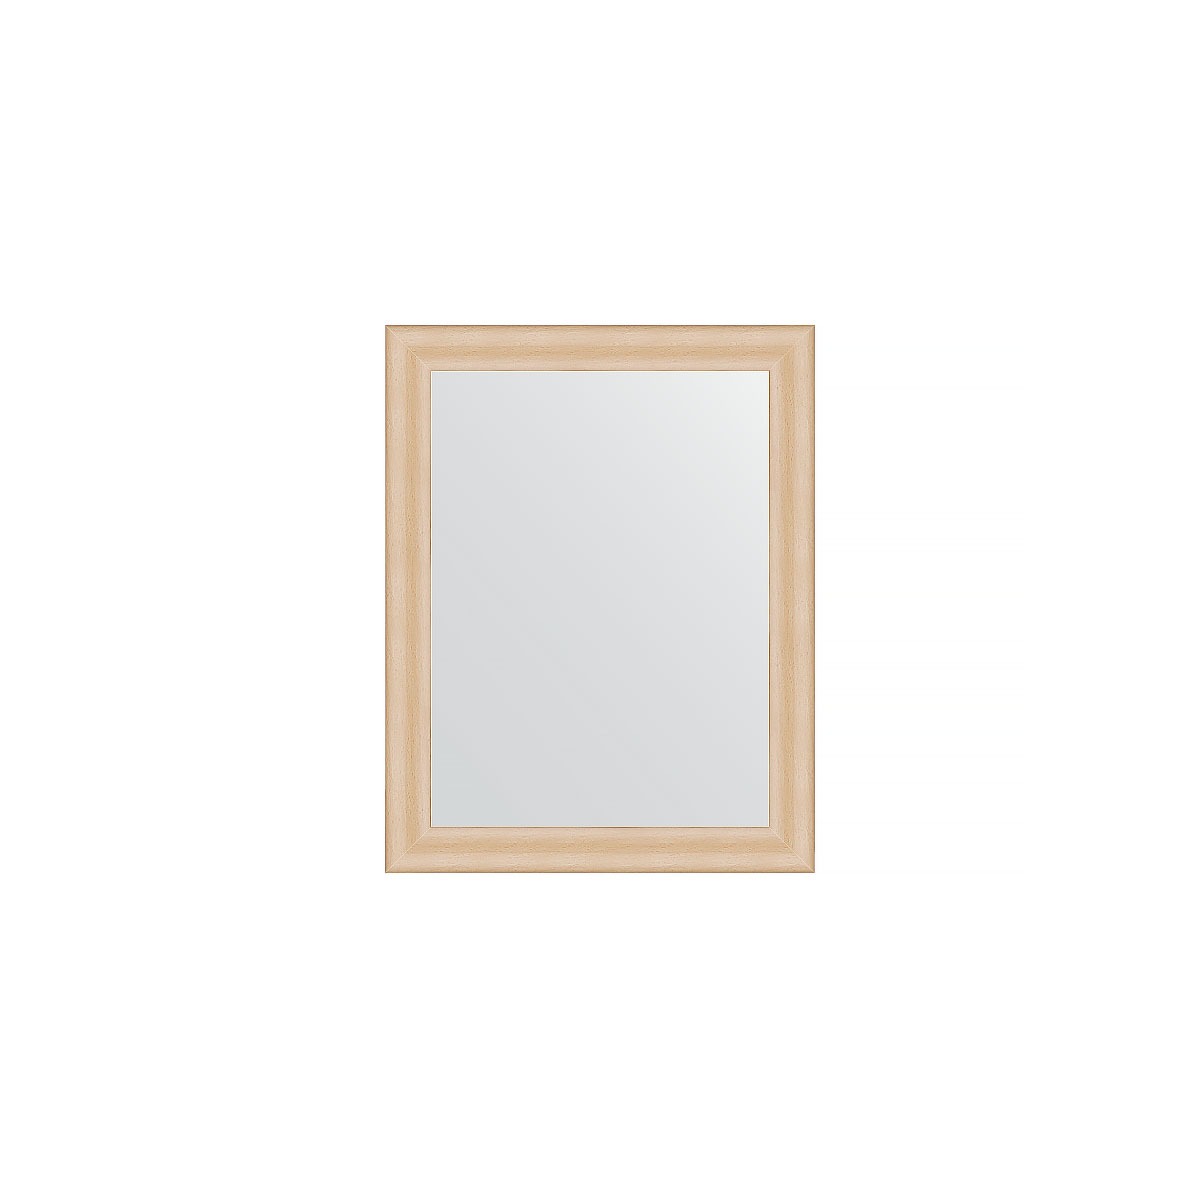 фото Зеркало в багетной раме evoform бук 37 мм 36х46 см